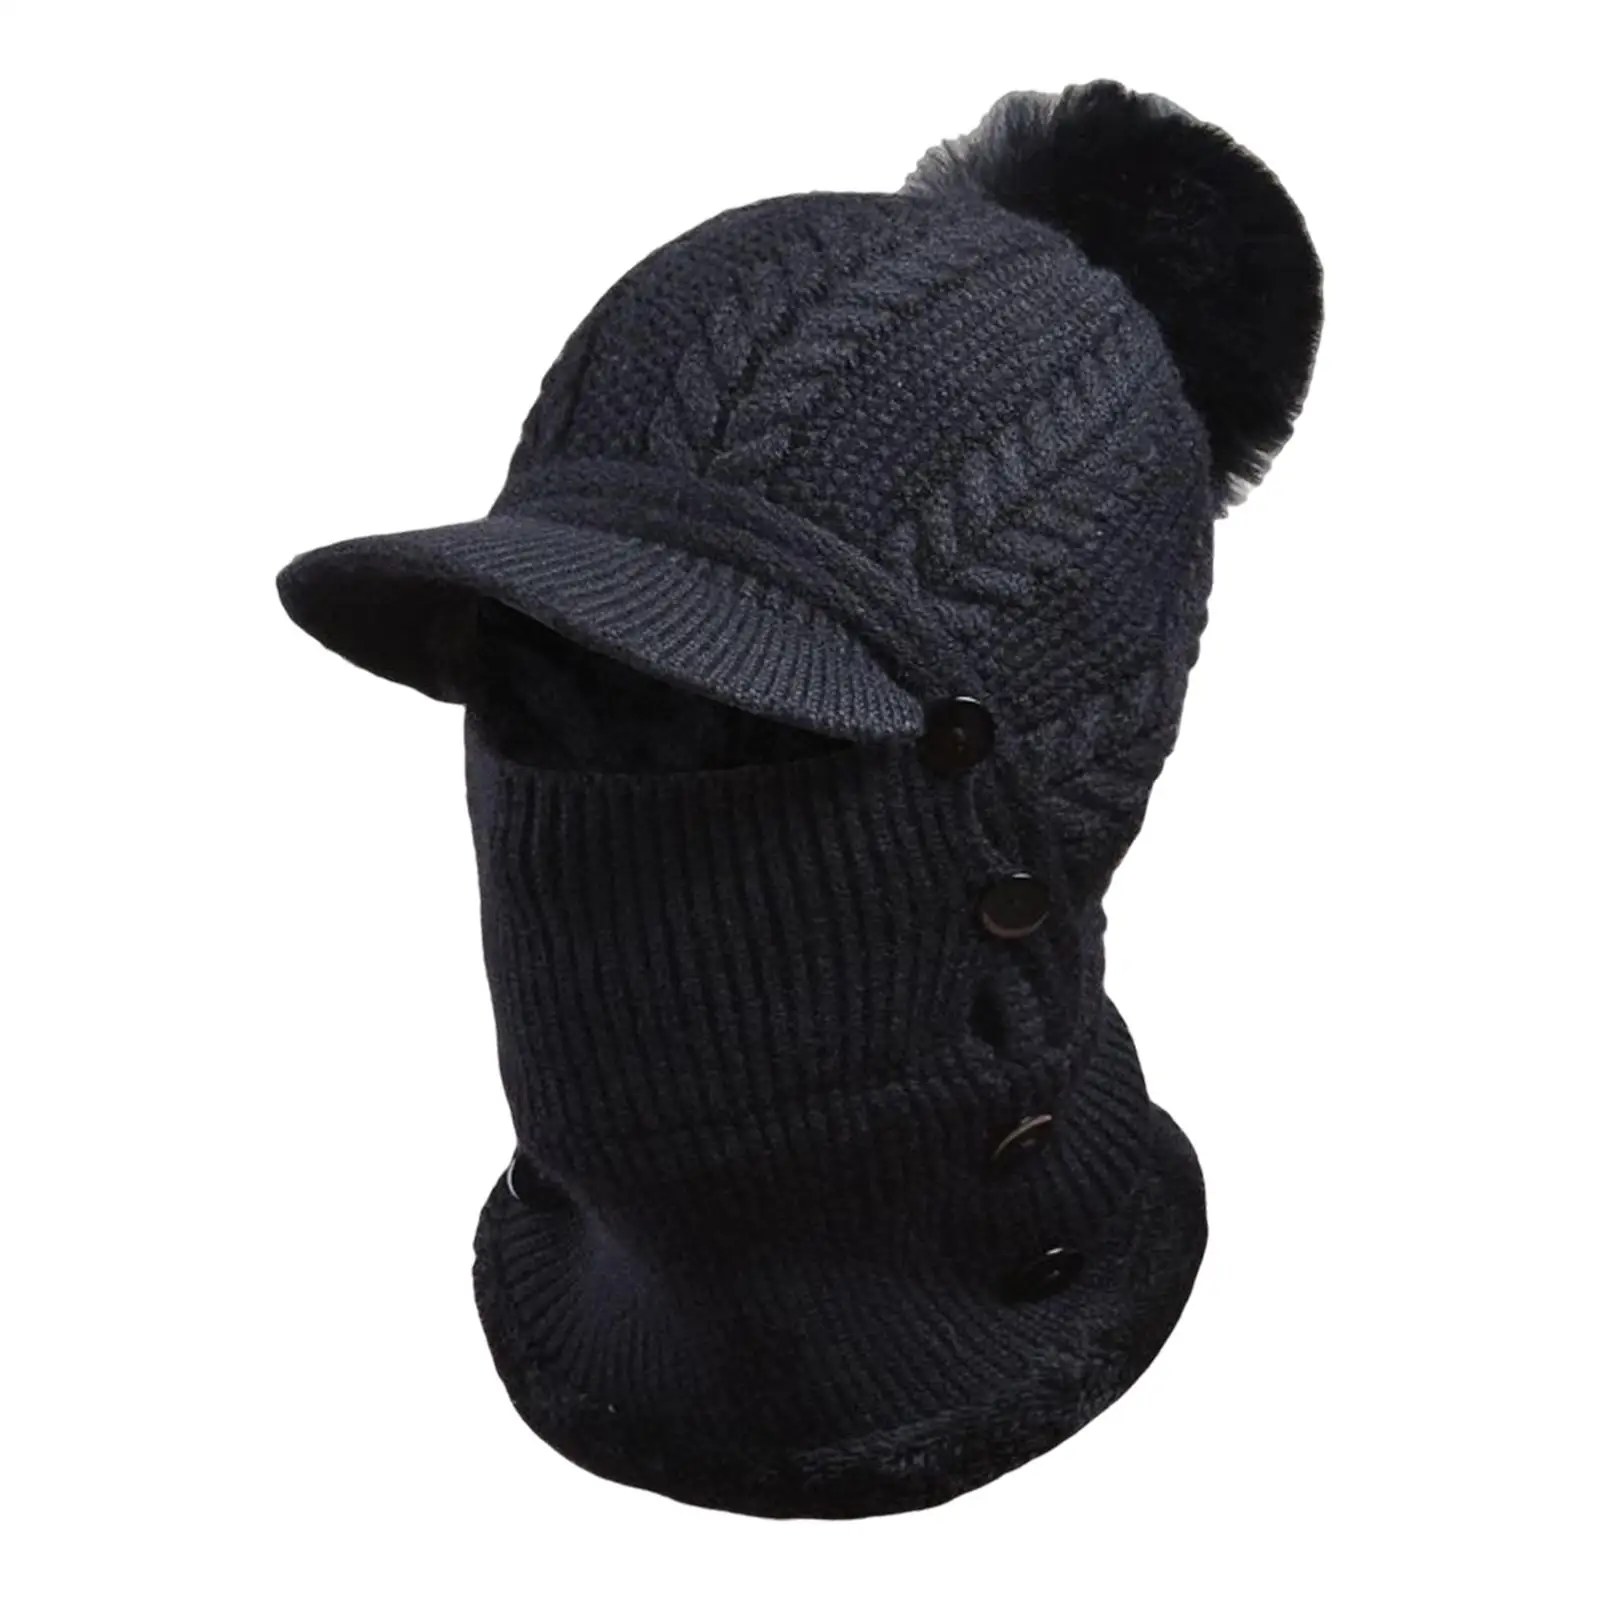 Winter Ski Mask Cap Neck Scarf Earmuffs Protector Button Hat Neck Gaiter Knit Balaclava Beanie Hat for Skateboard Skiing Unisex